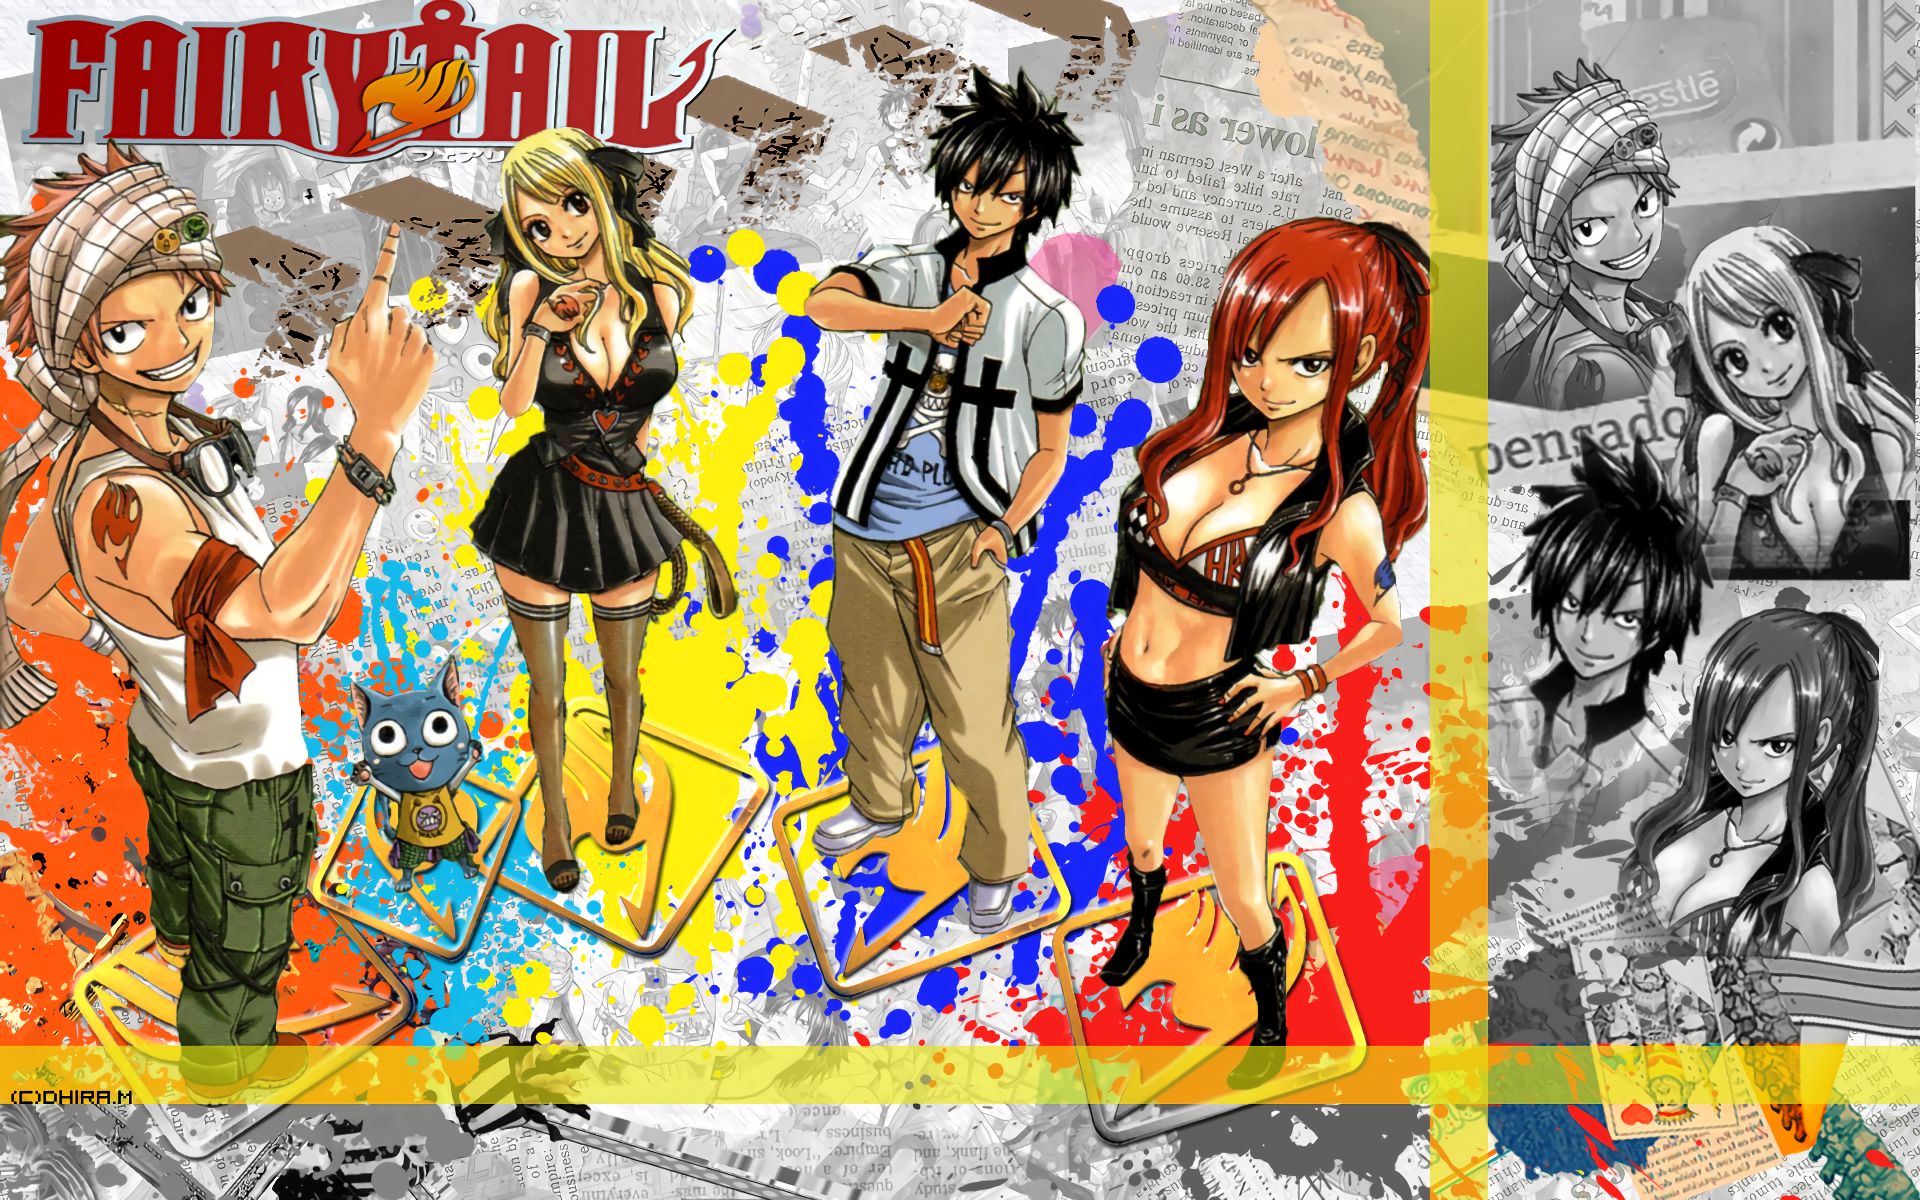 HD desktop wallpaper: Anime, Fairy Tail, Lucy Heartfilia, Natsu Dragneel,  Erza Scarlet, Gray Fullbuster, Happy (Fairy Tail), Plue (Fairy Tail)  download free picture #777474